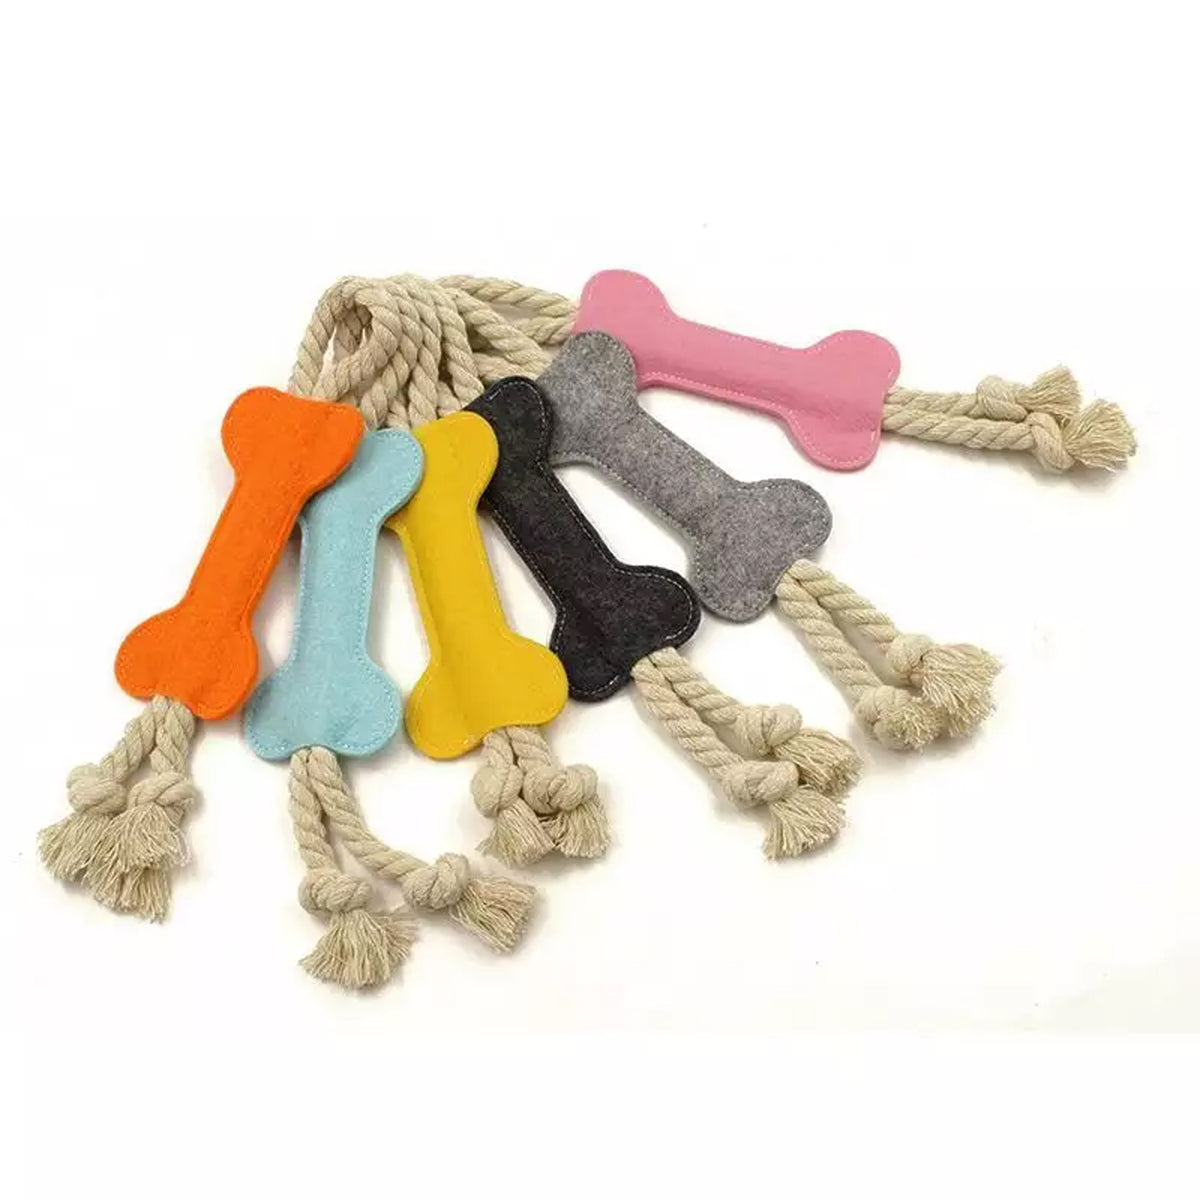  felt bone shape dog chew toy with rope